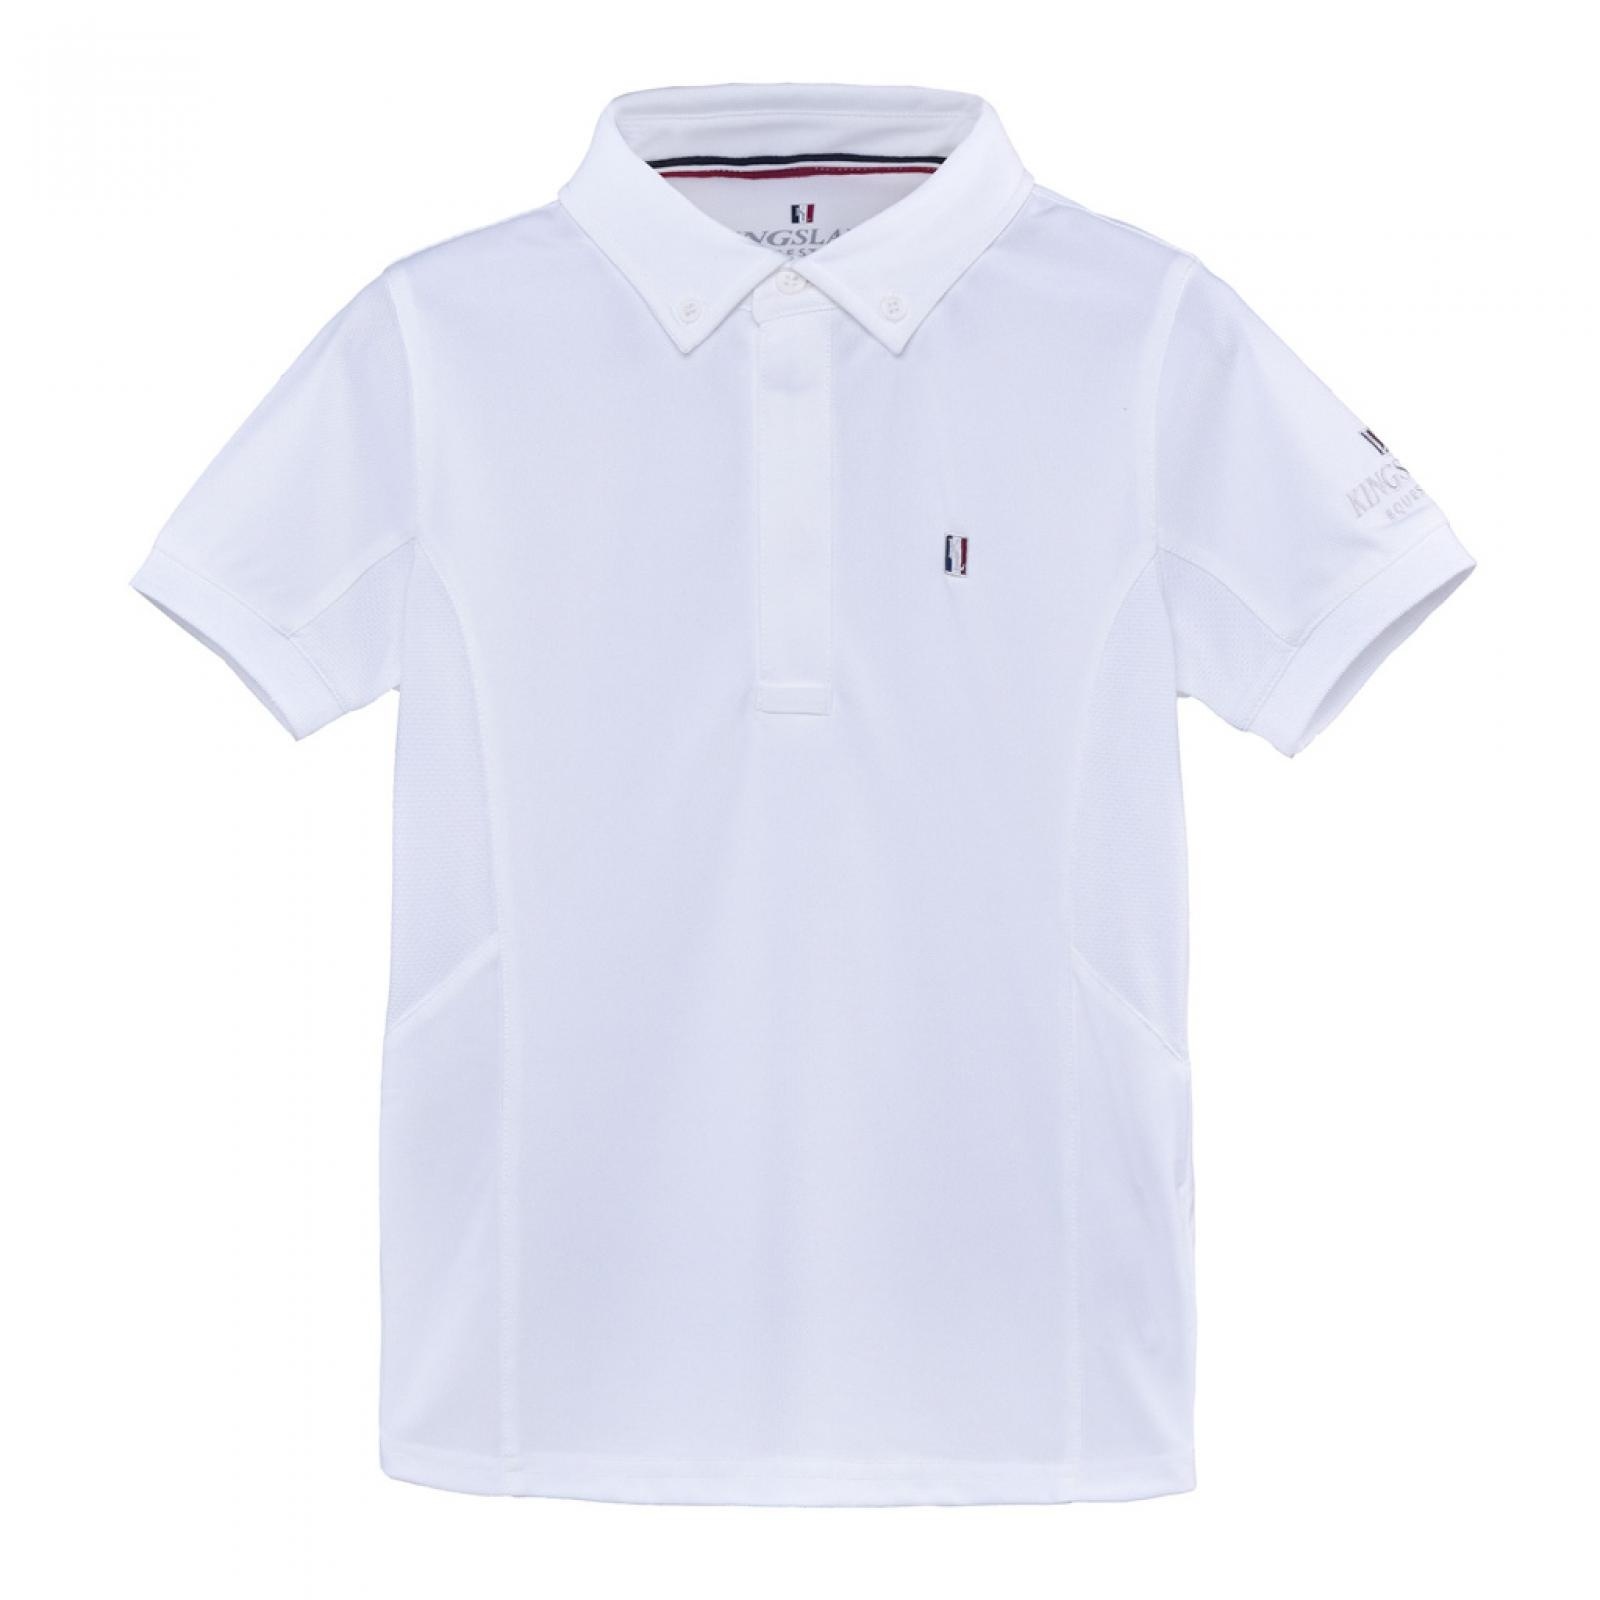 Kingsland Kingsland - Classic men short sleeve show shirt White